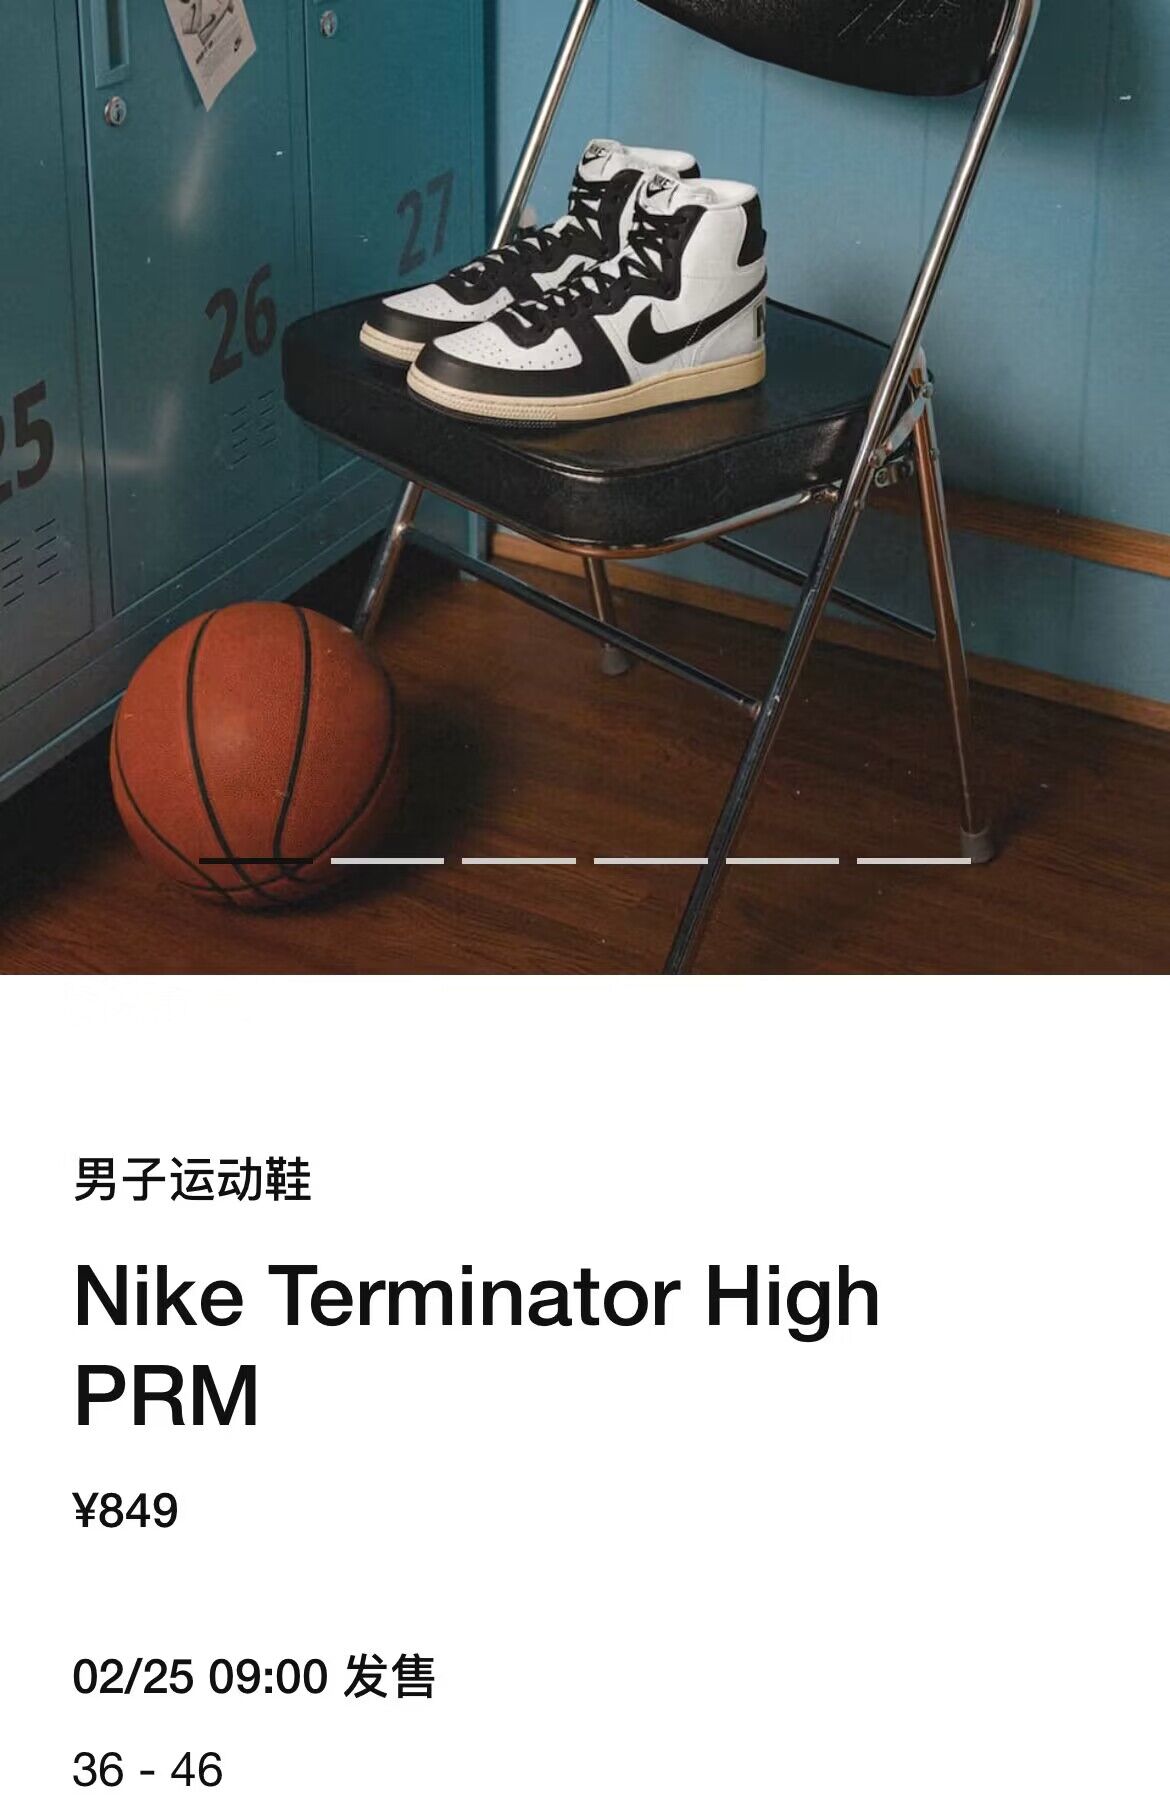 Nike,Terminator High,Air Jorda  周末发售提醒！除白水泥 AJ1，最想要的那双也来了！